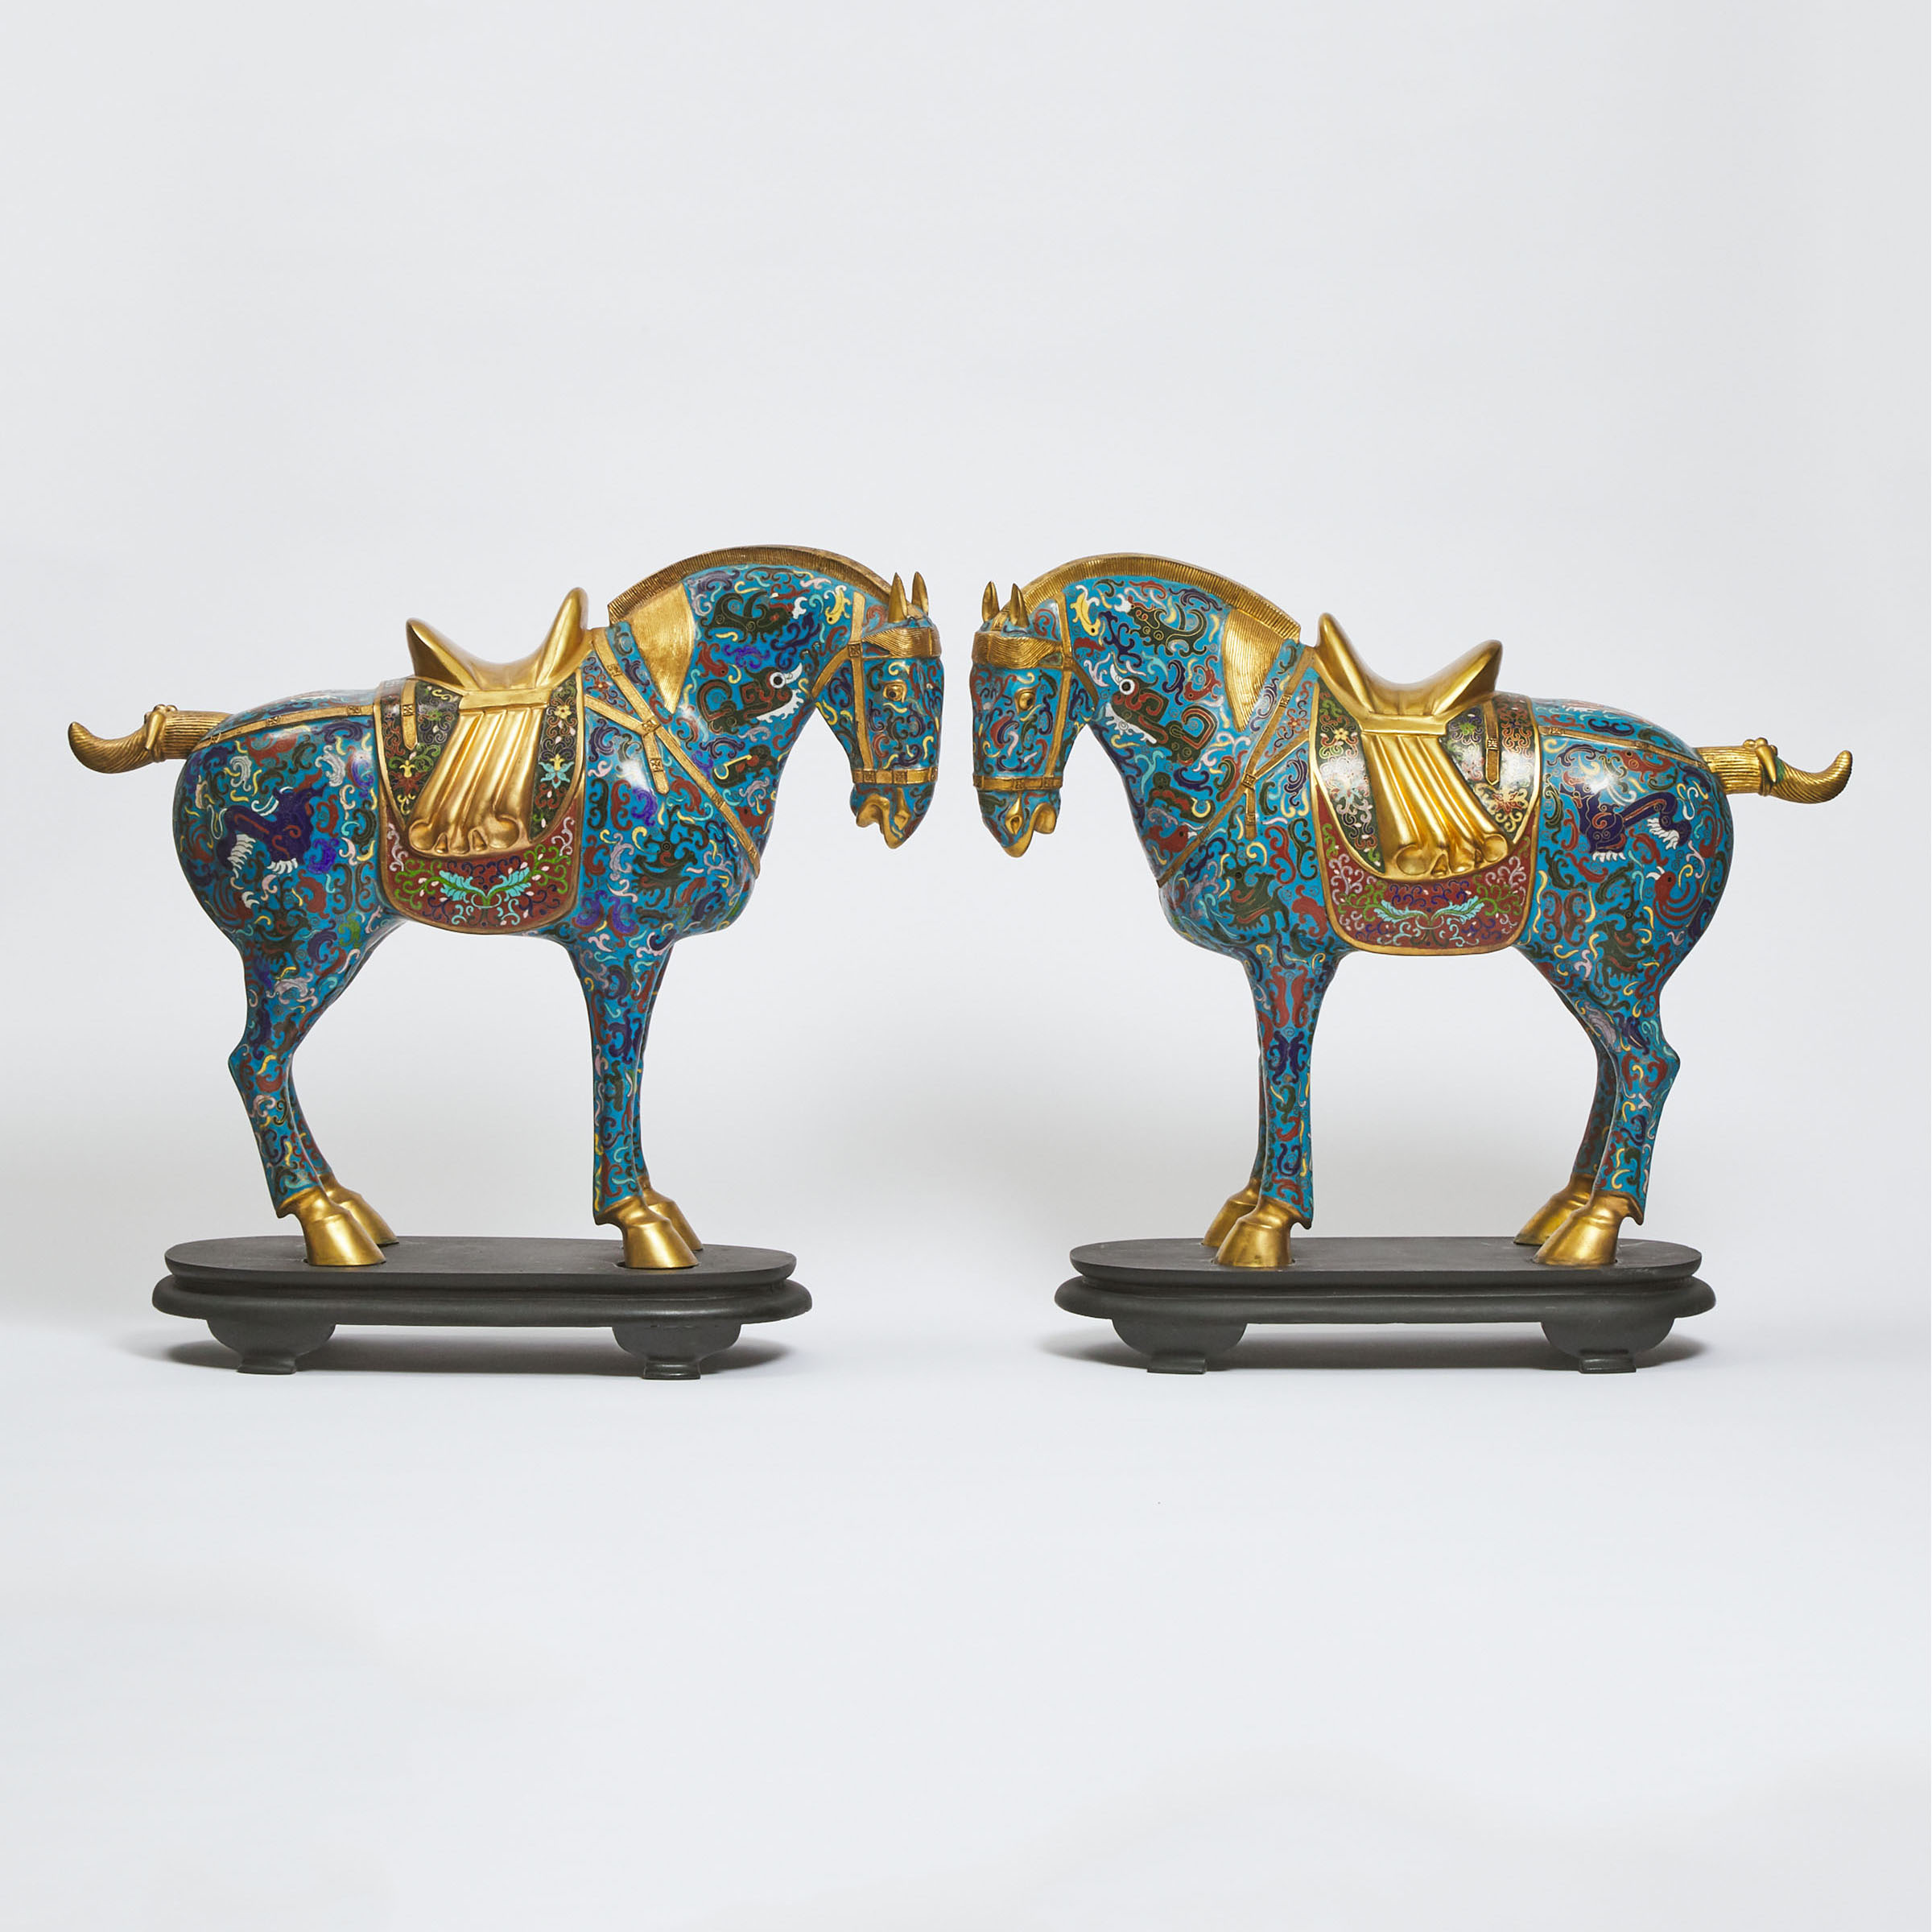 A Pair of Large Cloisonné Enamel Figures of Horses, Mid 20th Century